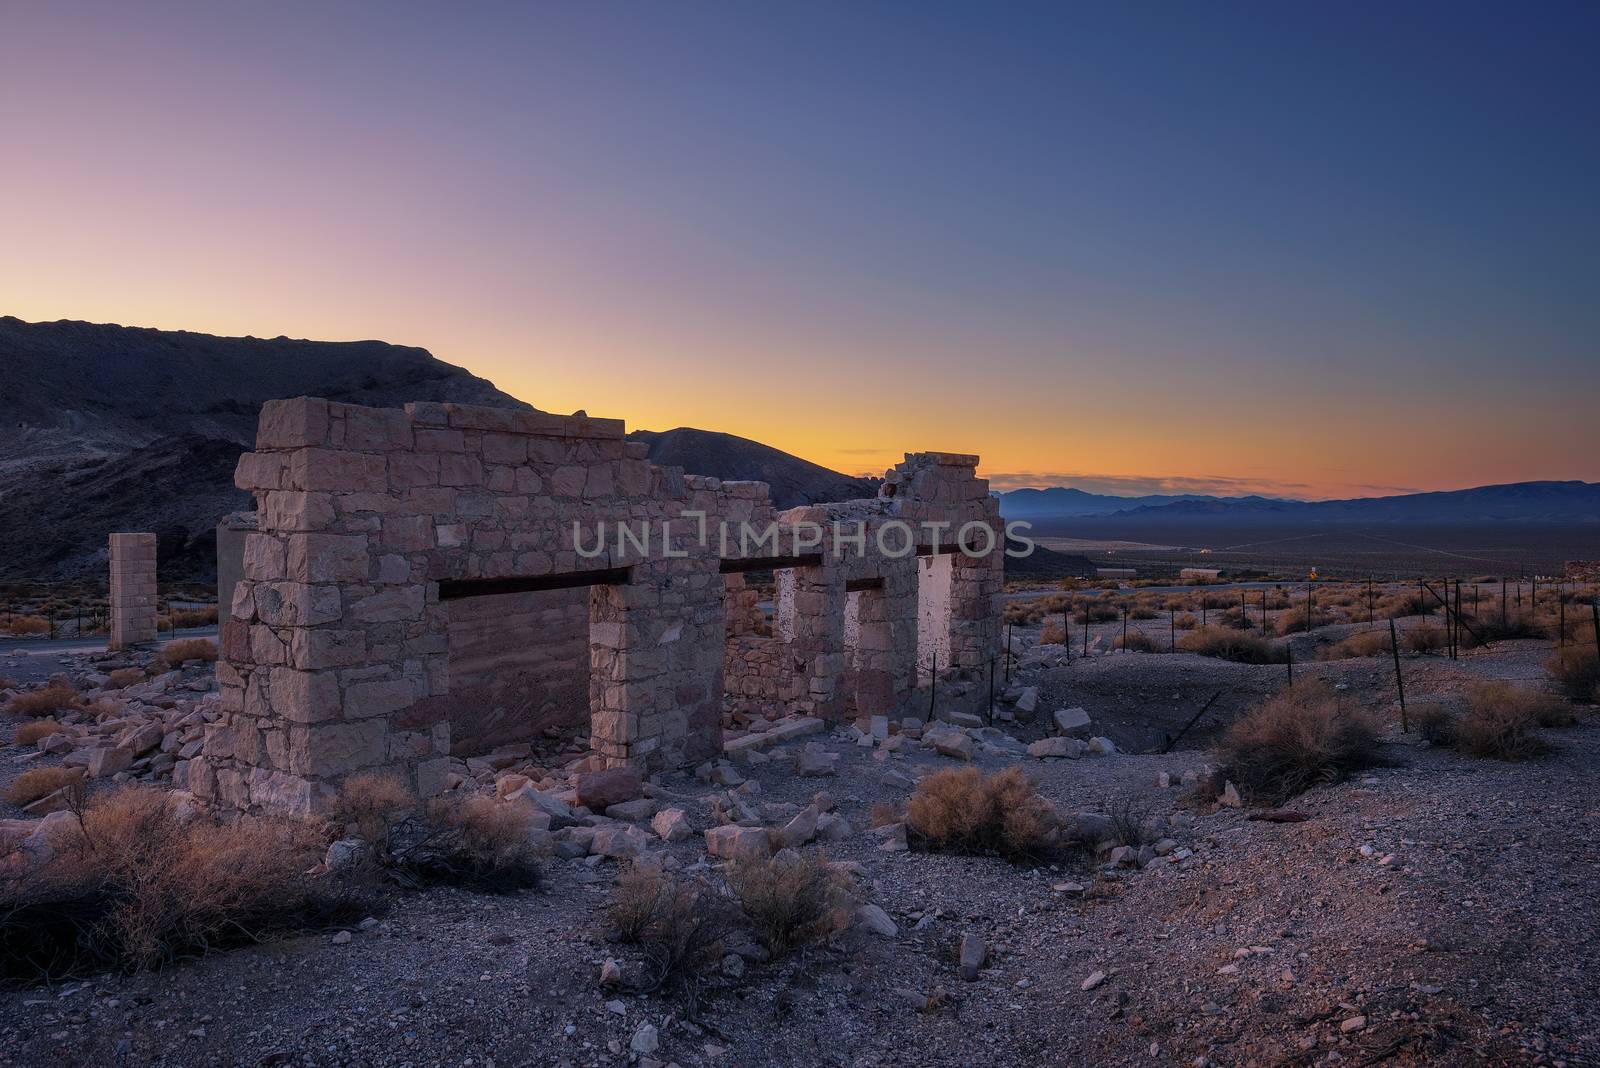 Sunrise above ruined building in Rhyolite, Nevada by nickfox